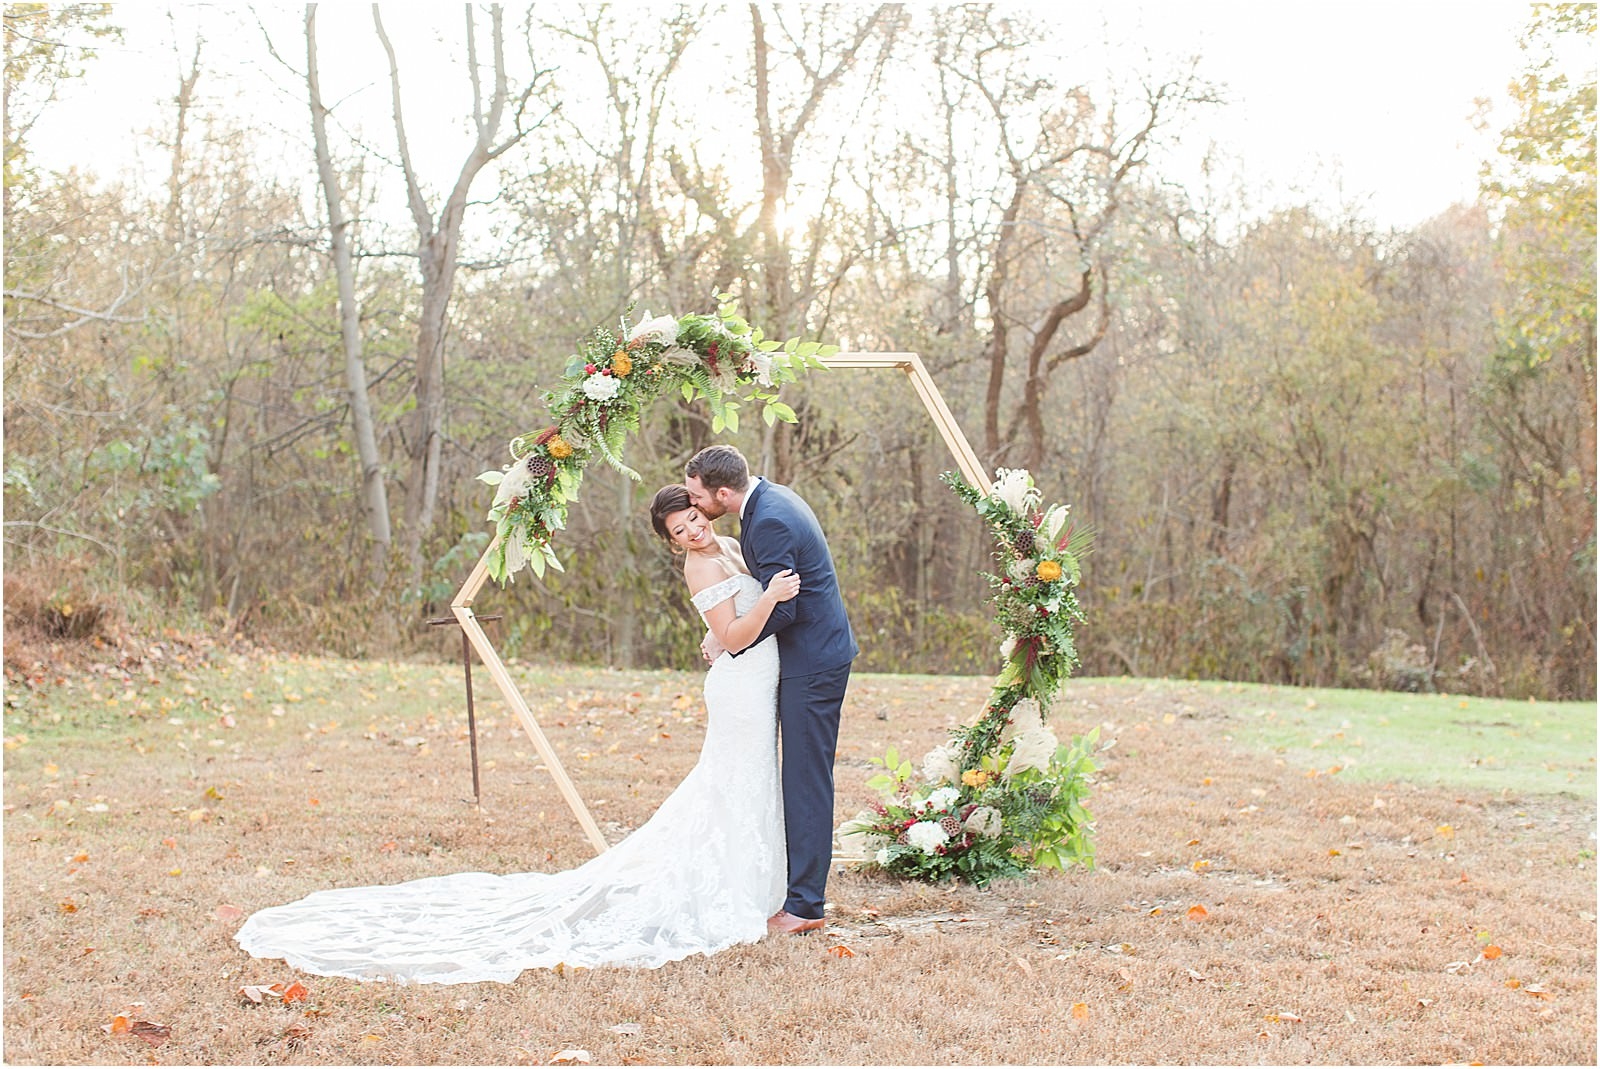 Walker and Alyssa's intimate fall wedding in Southern Indiana. | Wedding Photography | The Corner House Wedding | Southern Indiana Wedding | #fallwedding #intimatewedding | 072.jpg